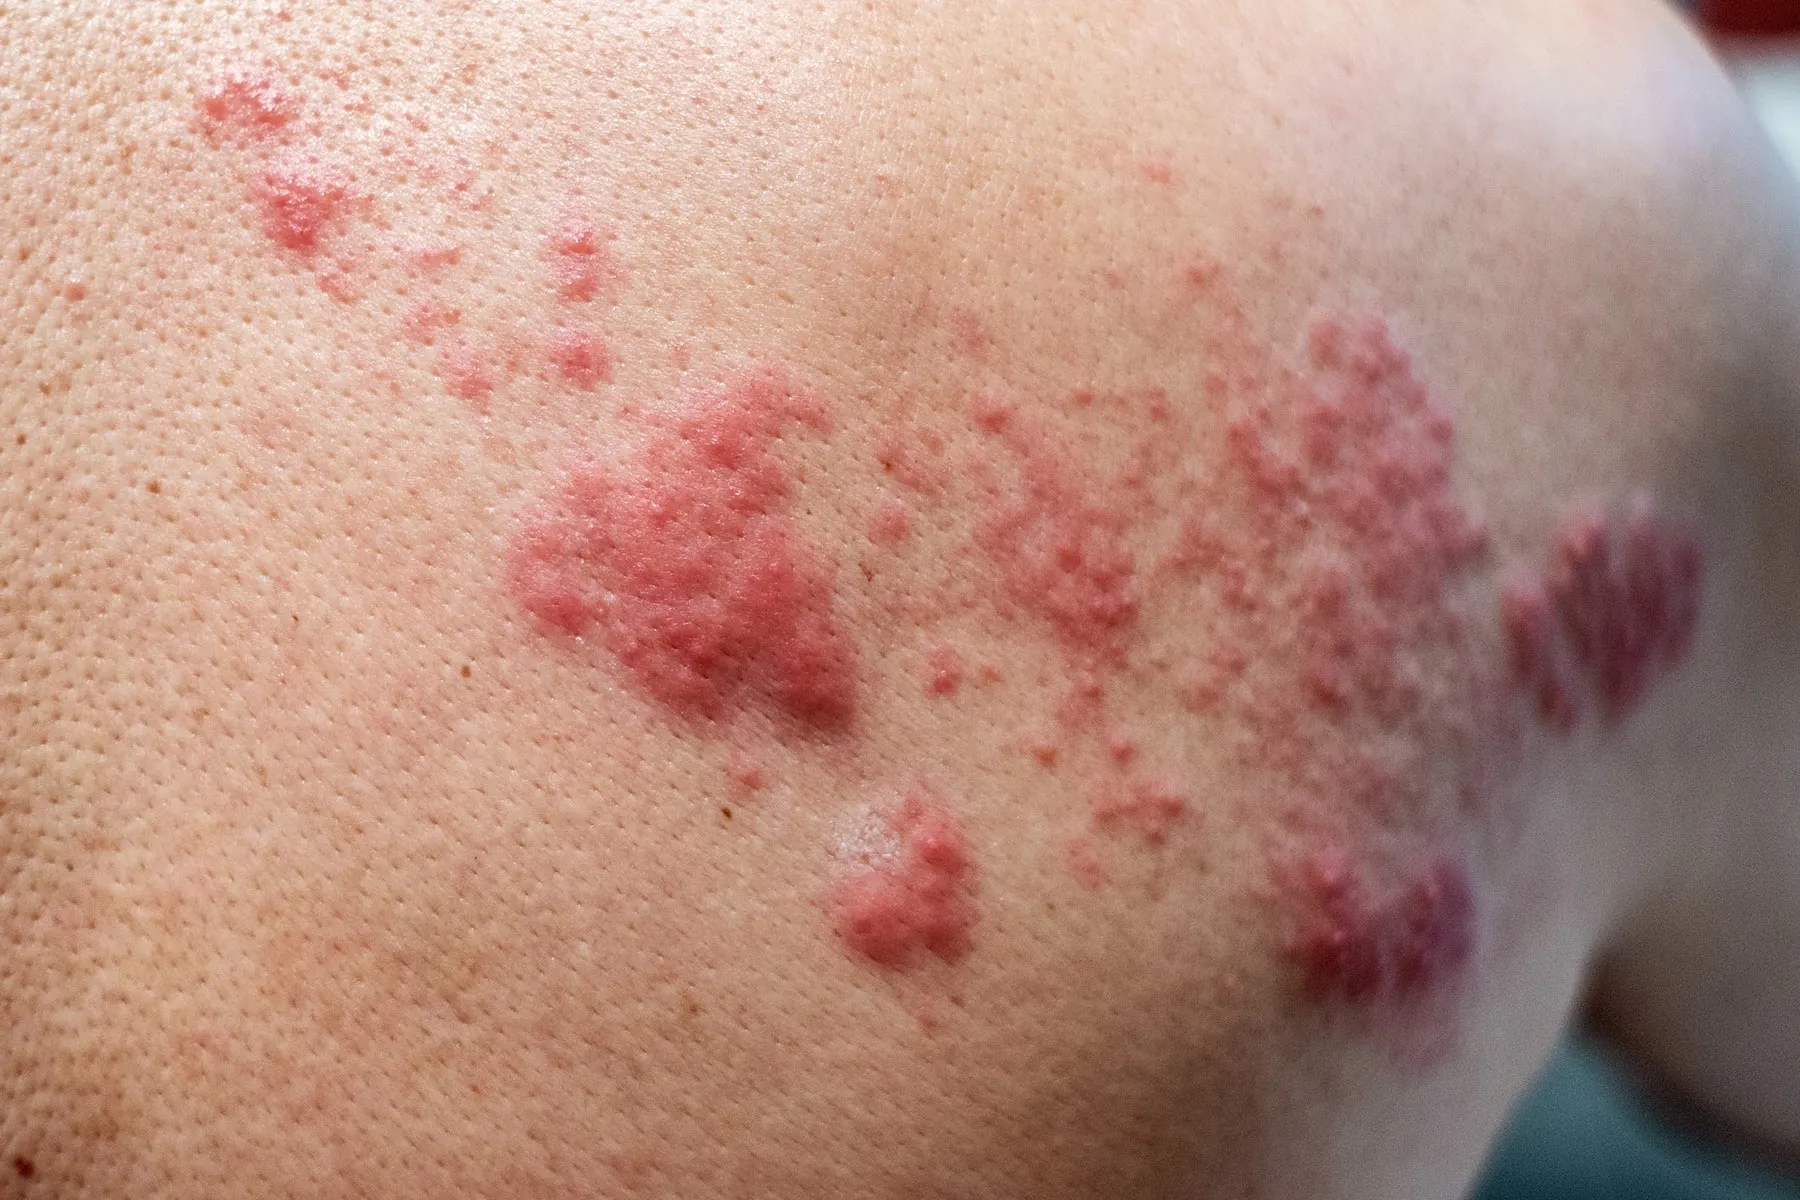 warts on skin rash